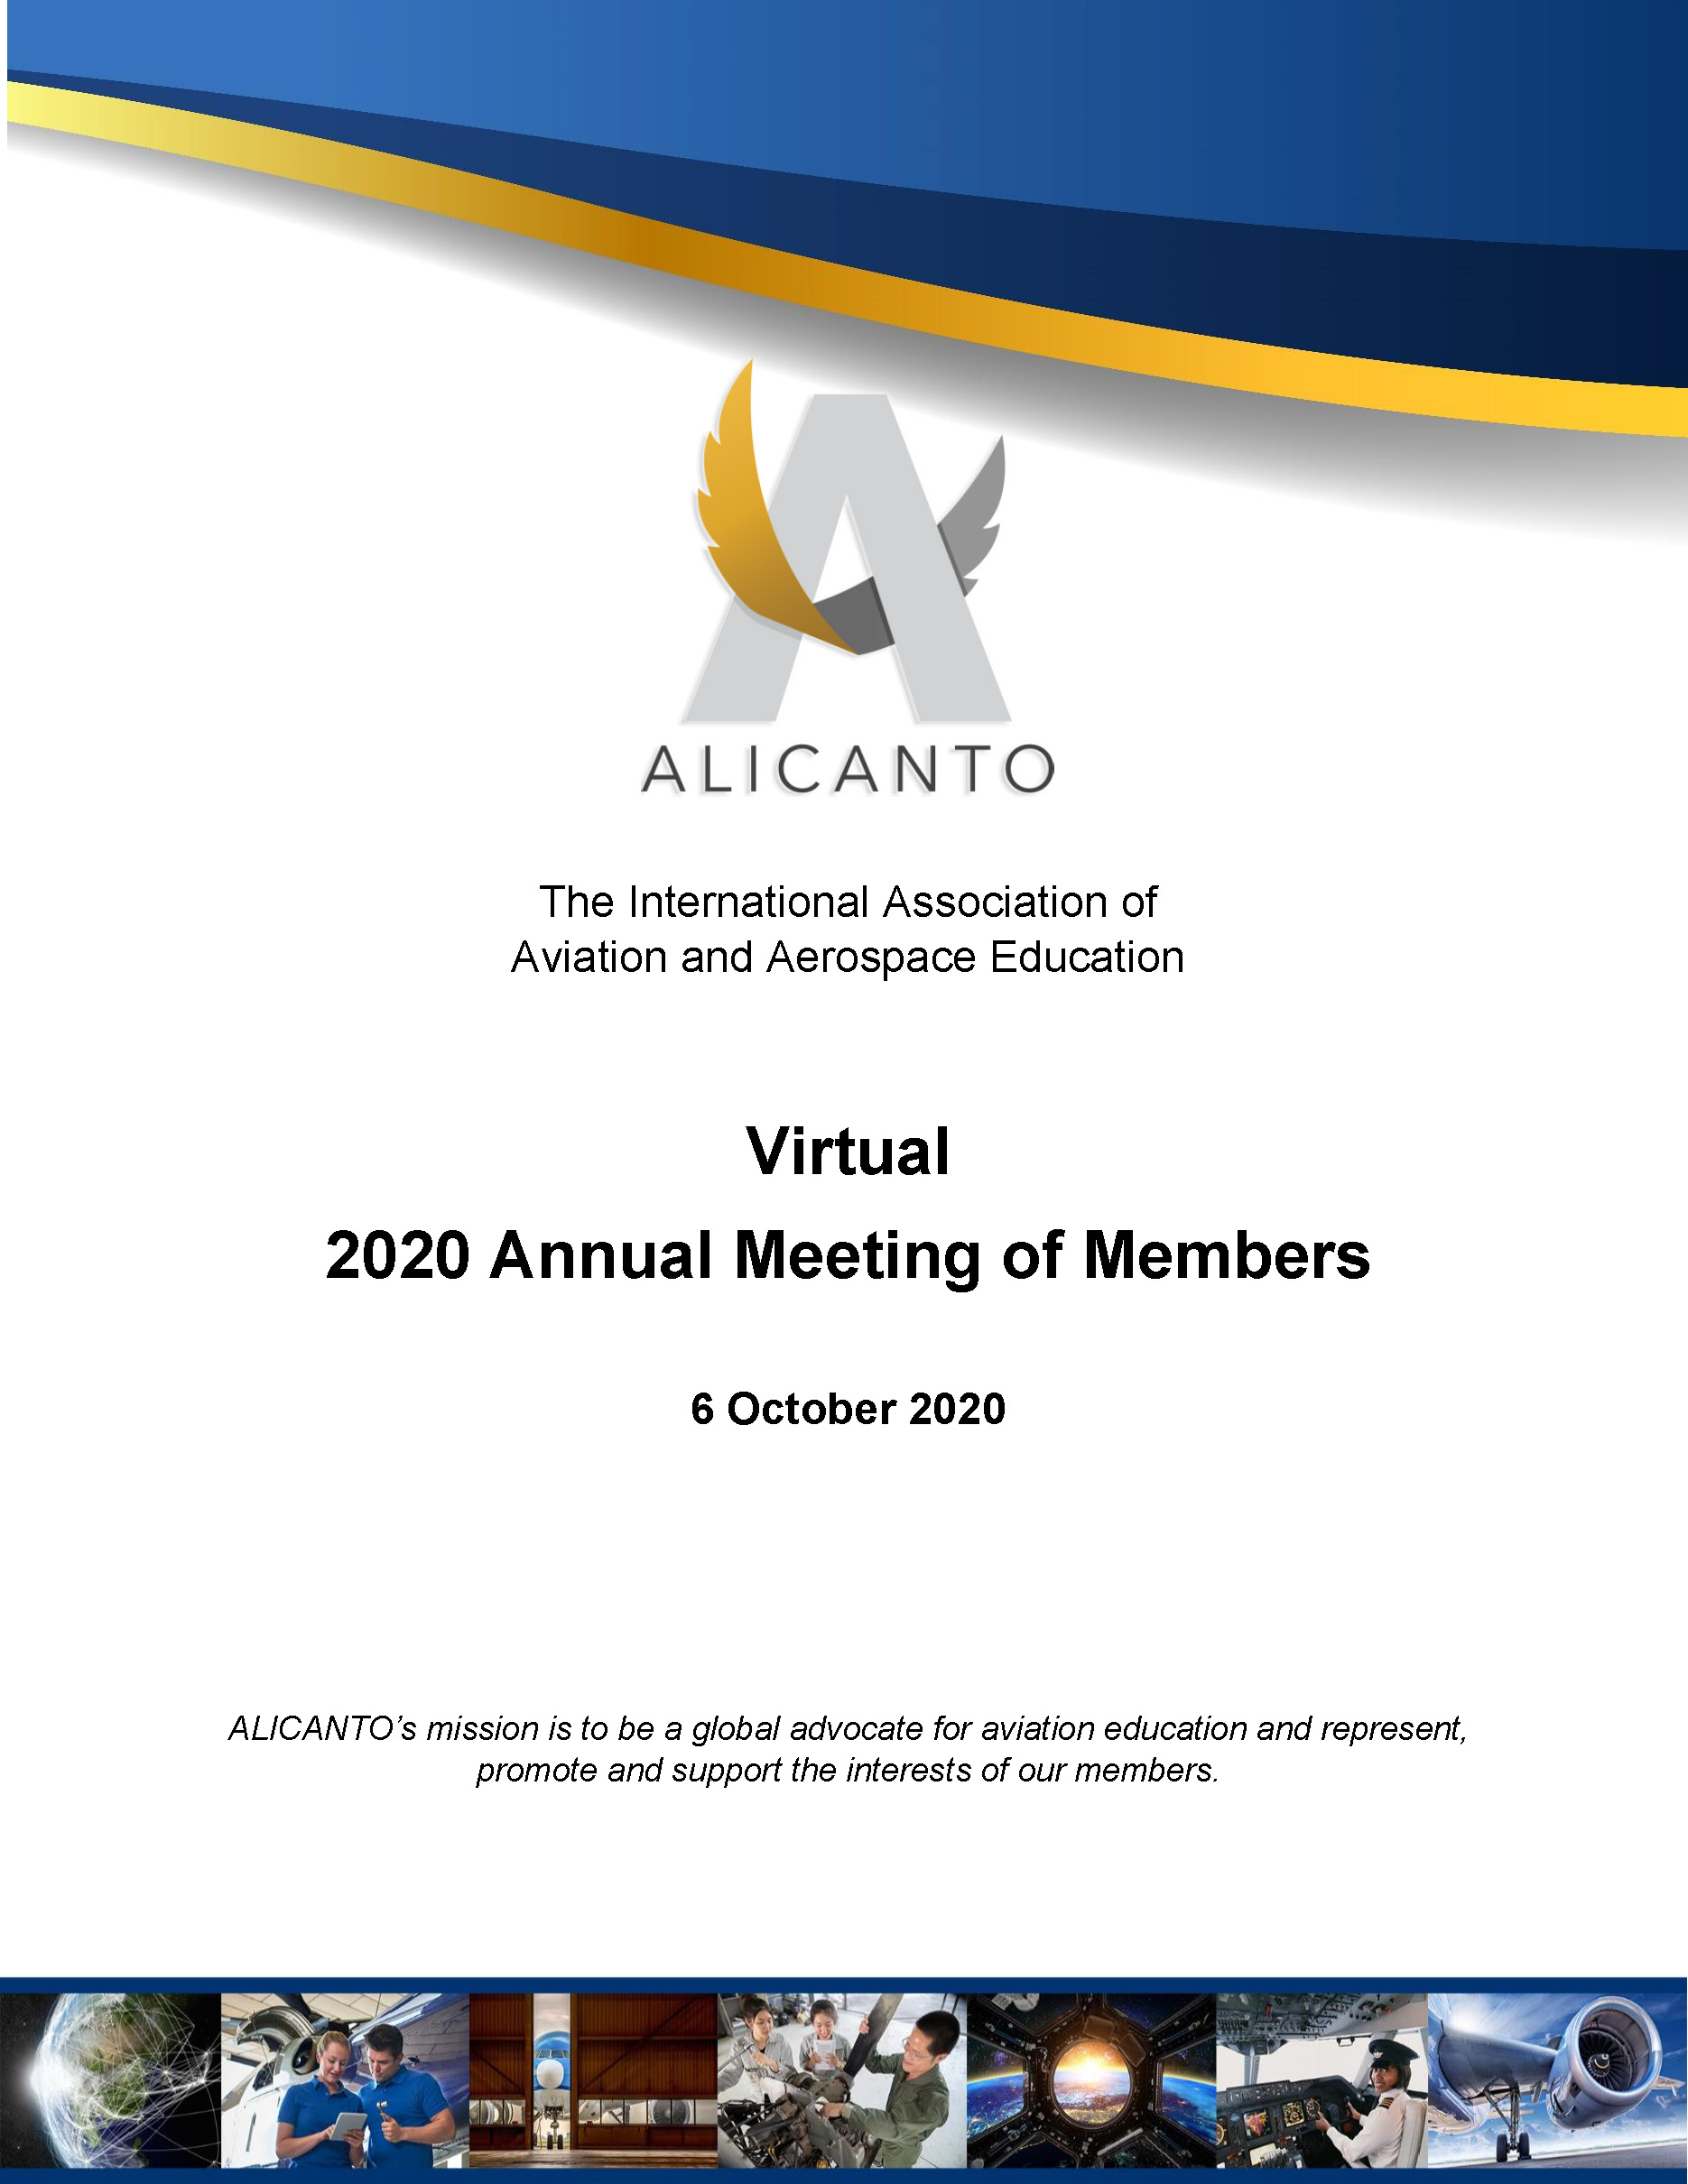 View the Virtual Meeting Agenda.